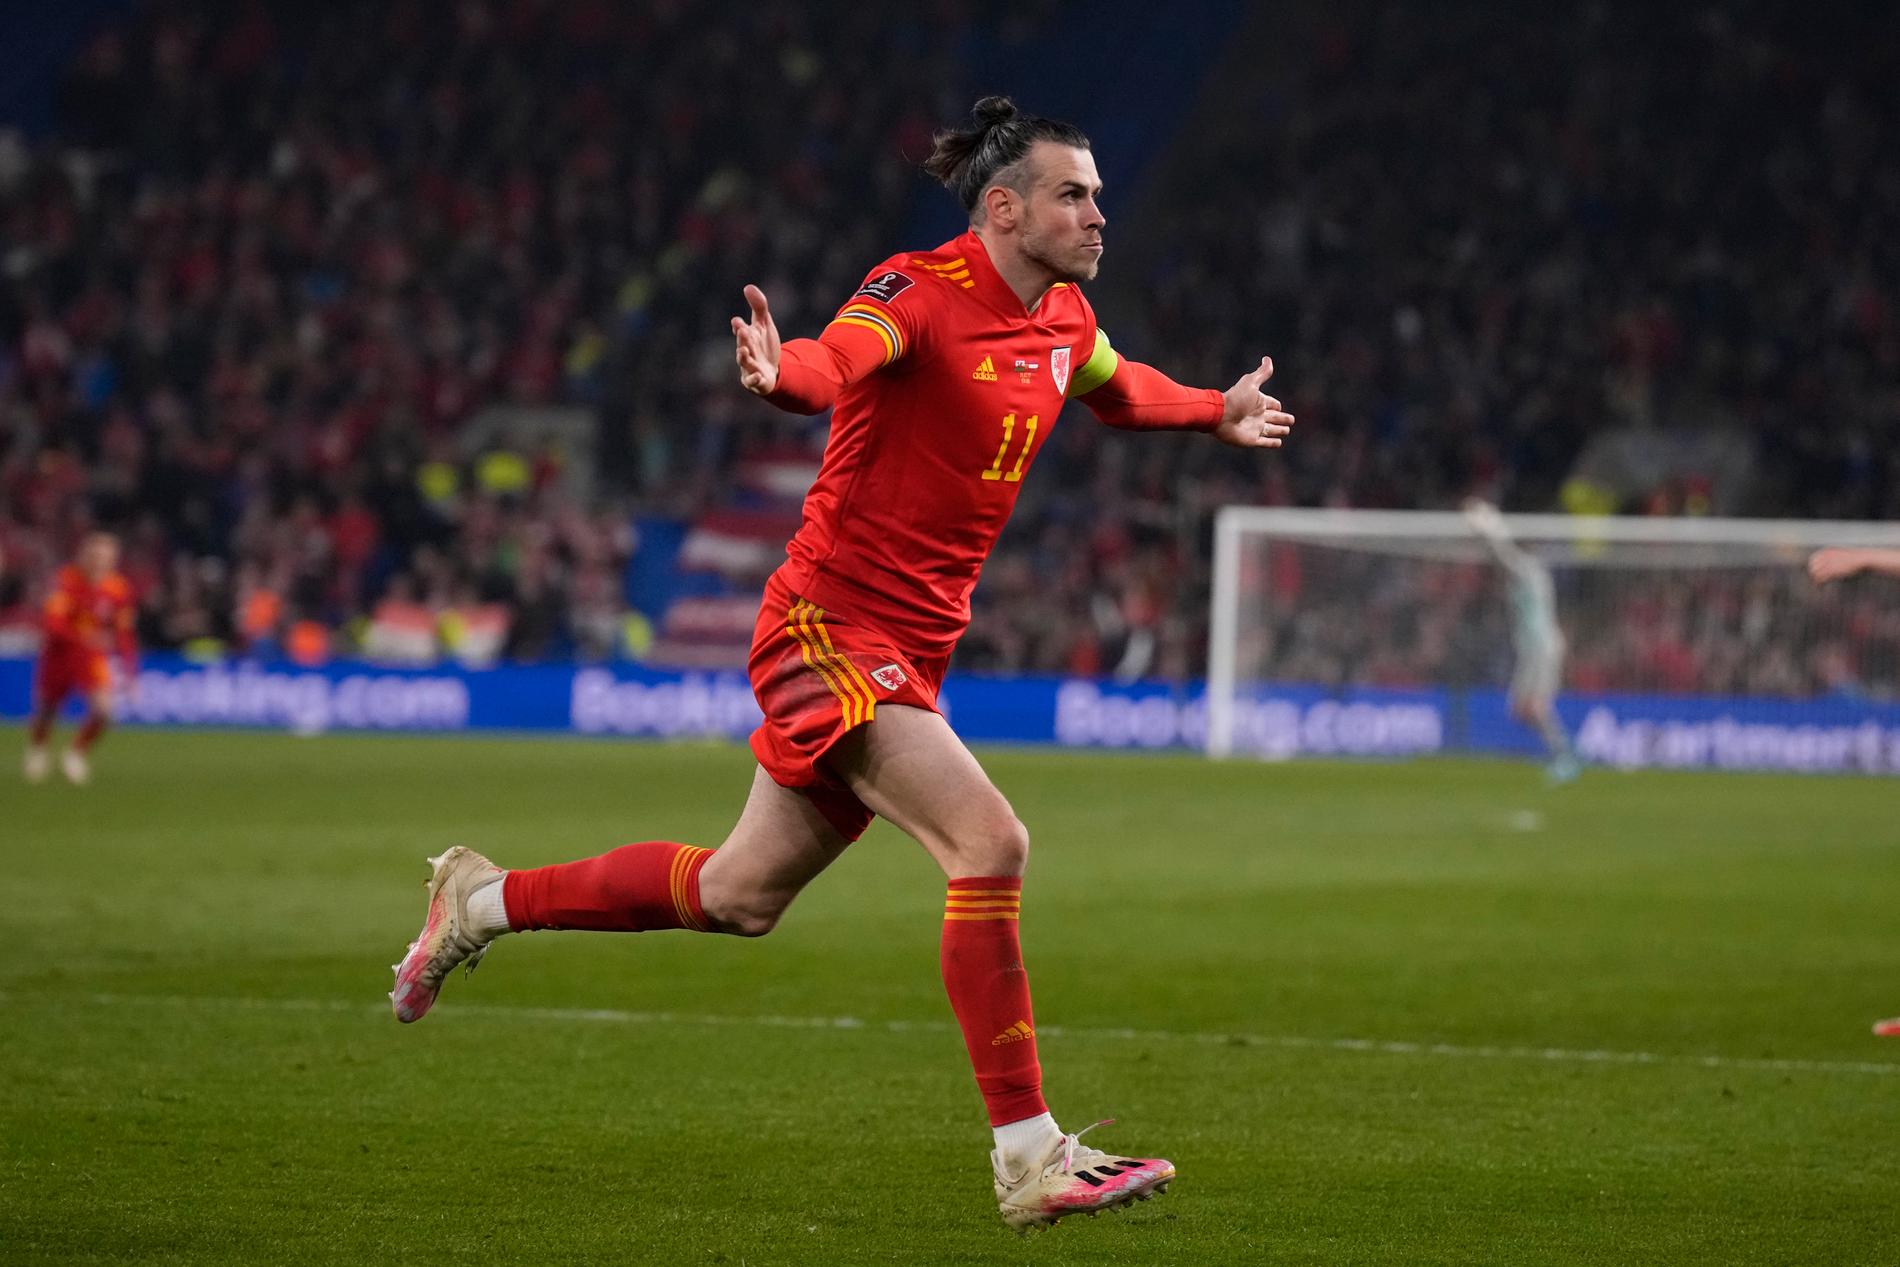 Wales Gareth Bale gjorde två mål i matchen mot Österrike.